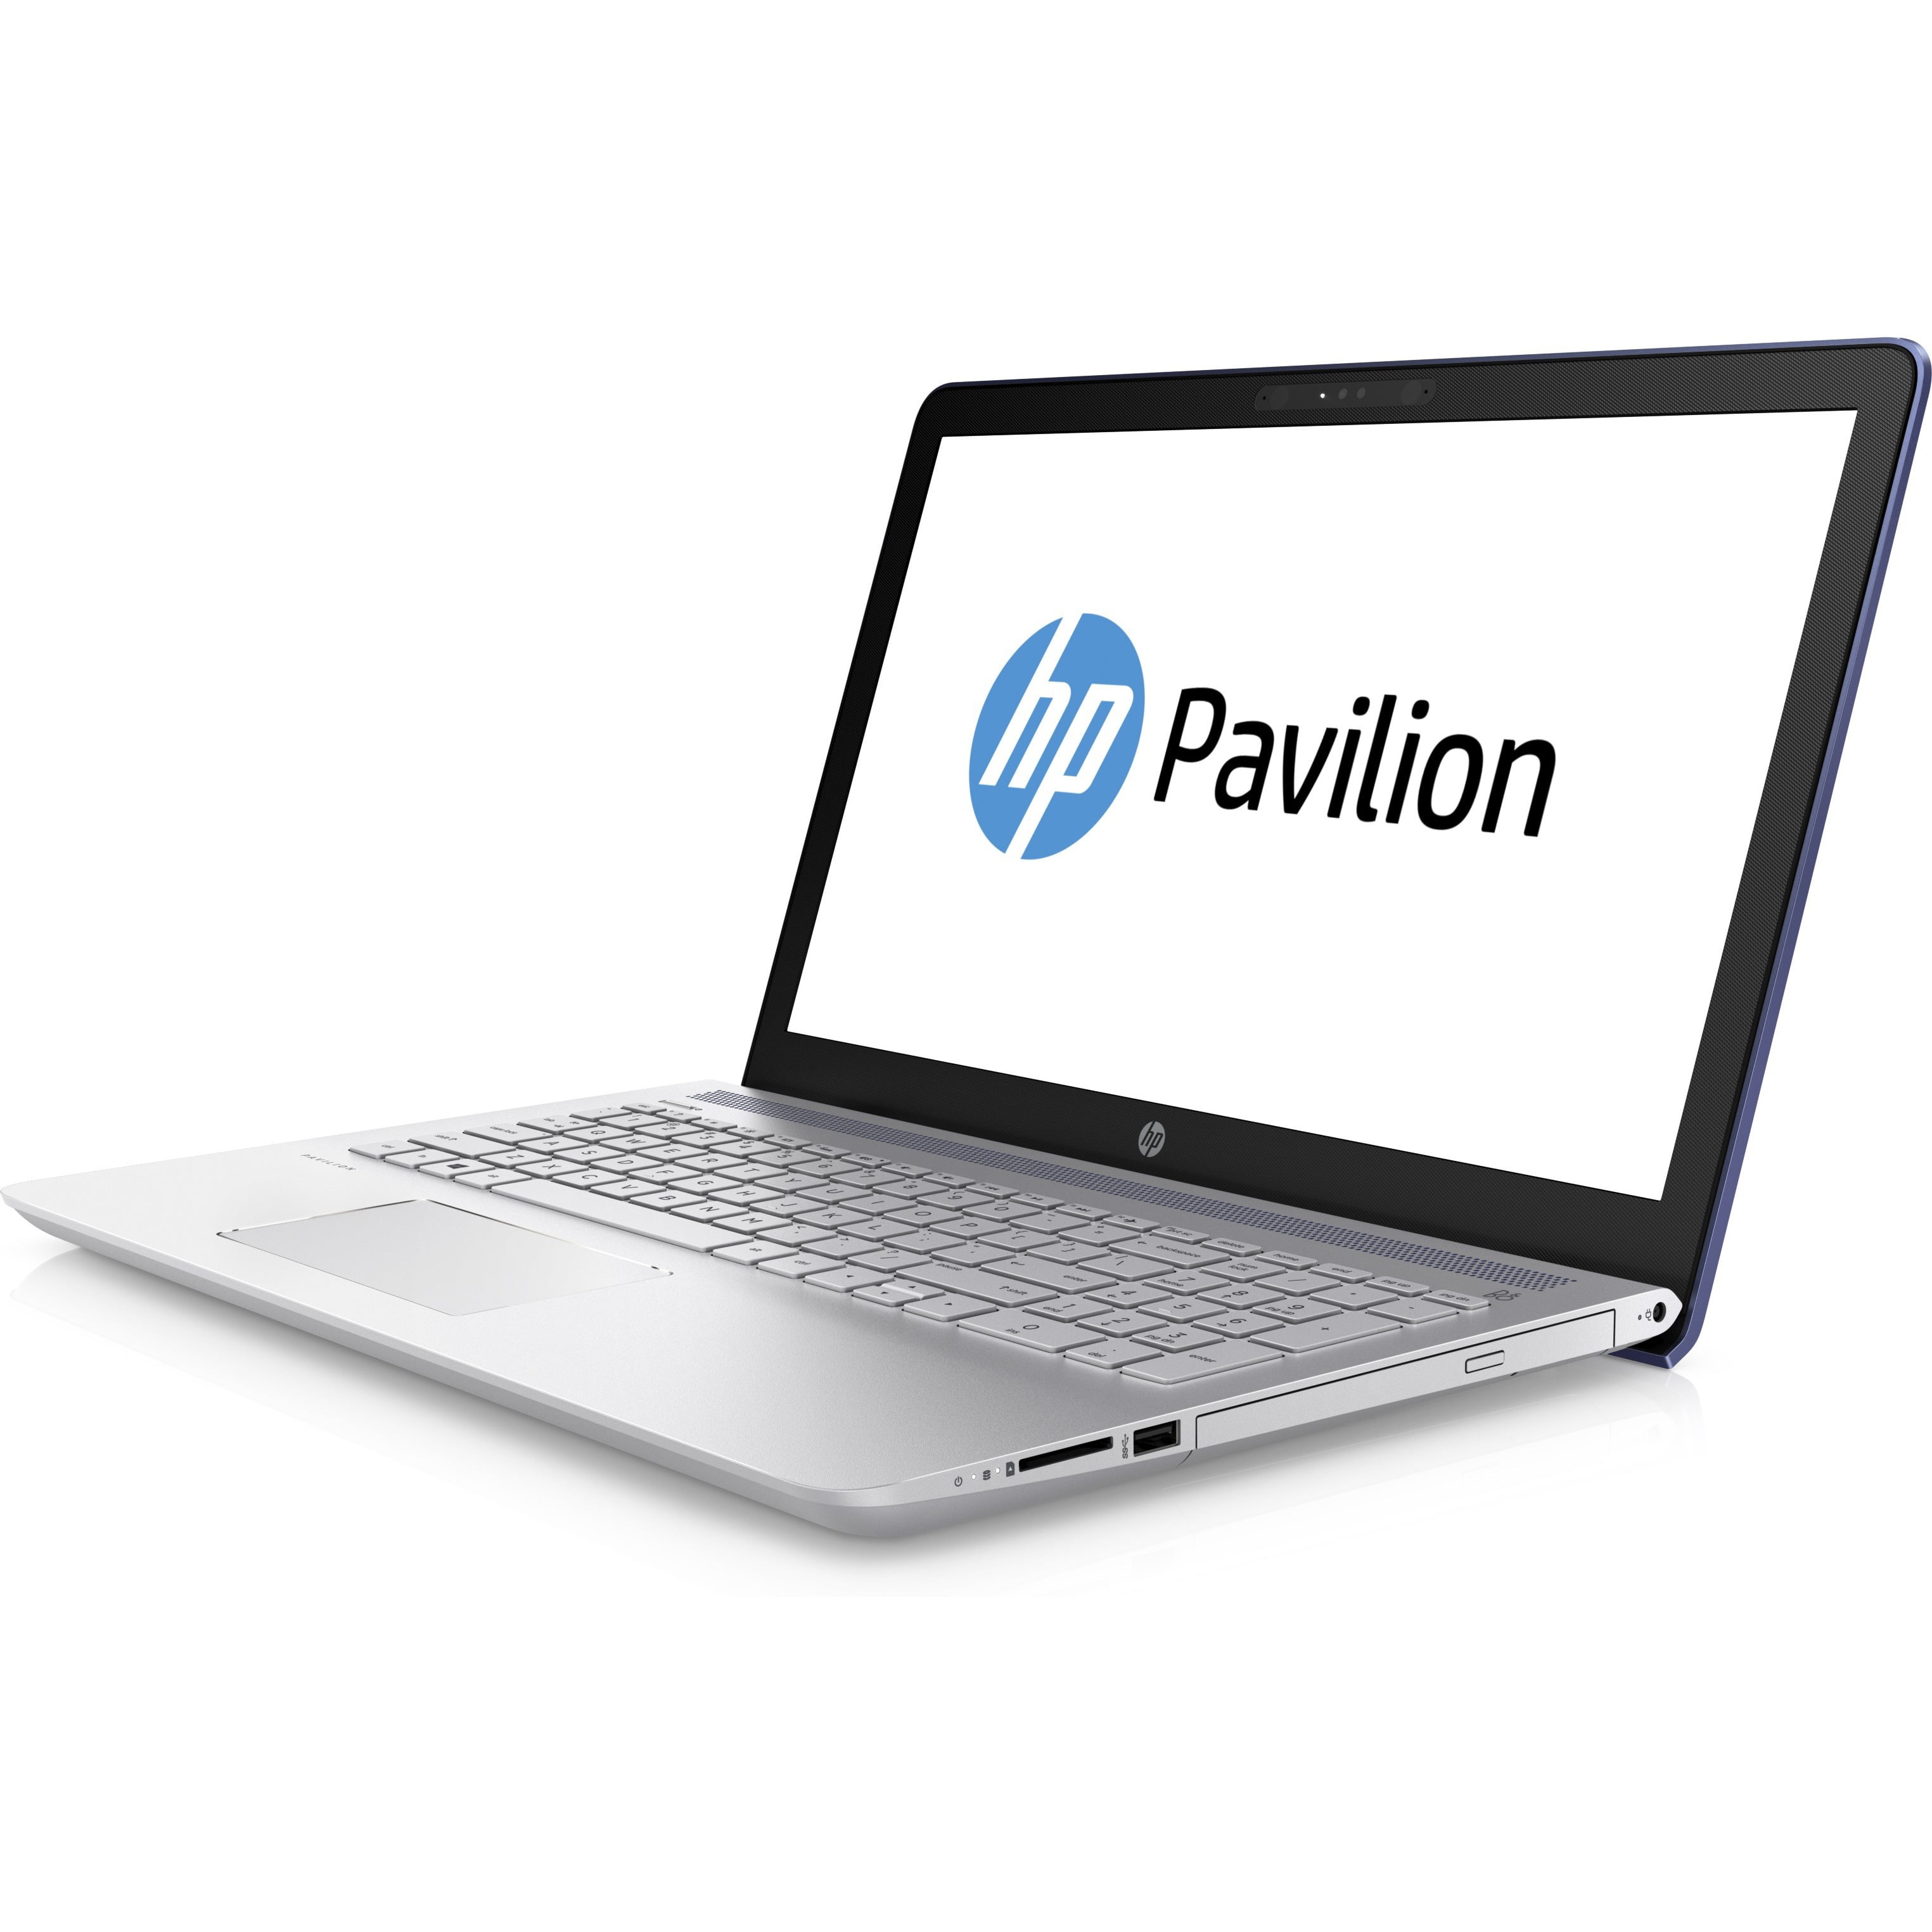 HP Pavilion 15-Cc066Nr 15.6" Laptop, Windows 10 Home, Touchscreen